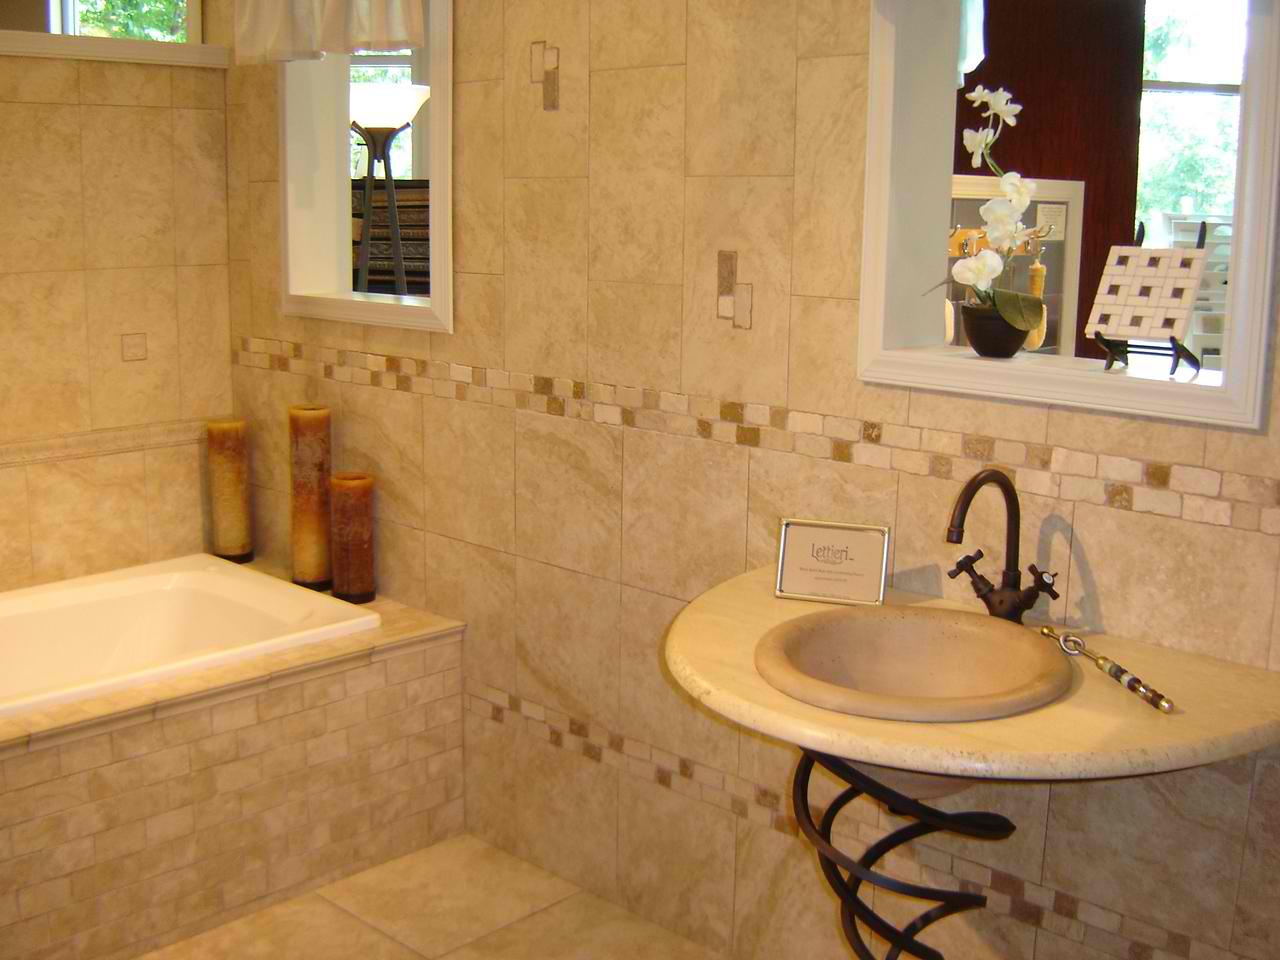 Bathroom-tile-ideas-bathroom-tile-design